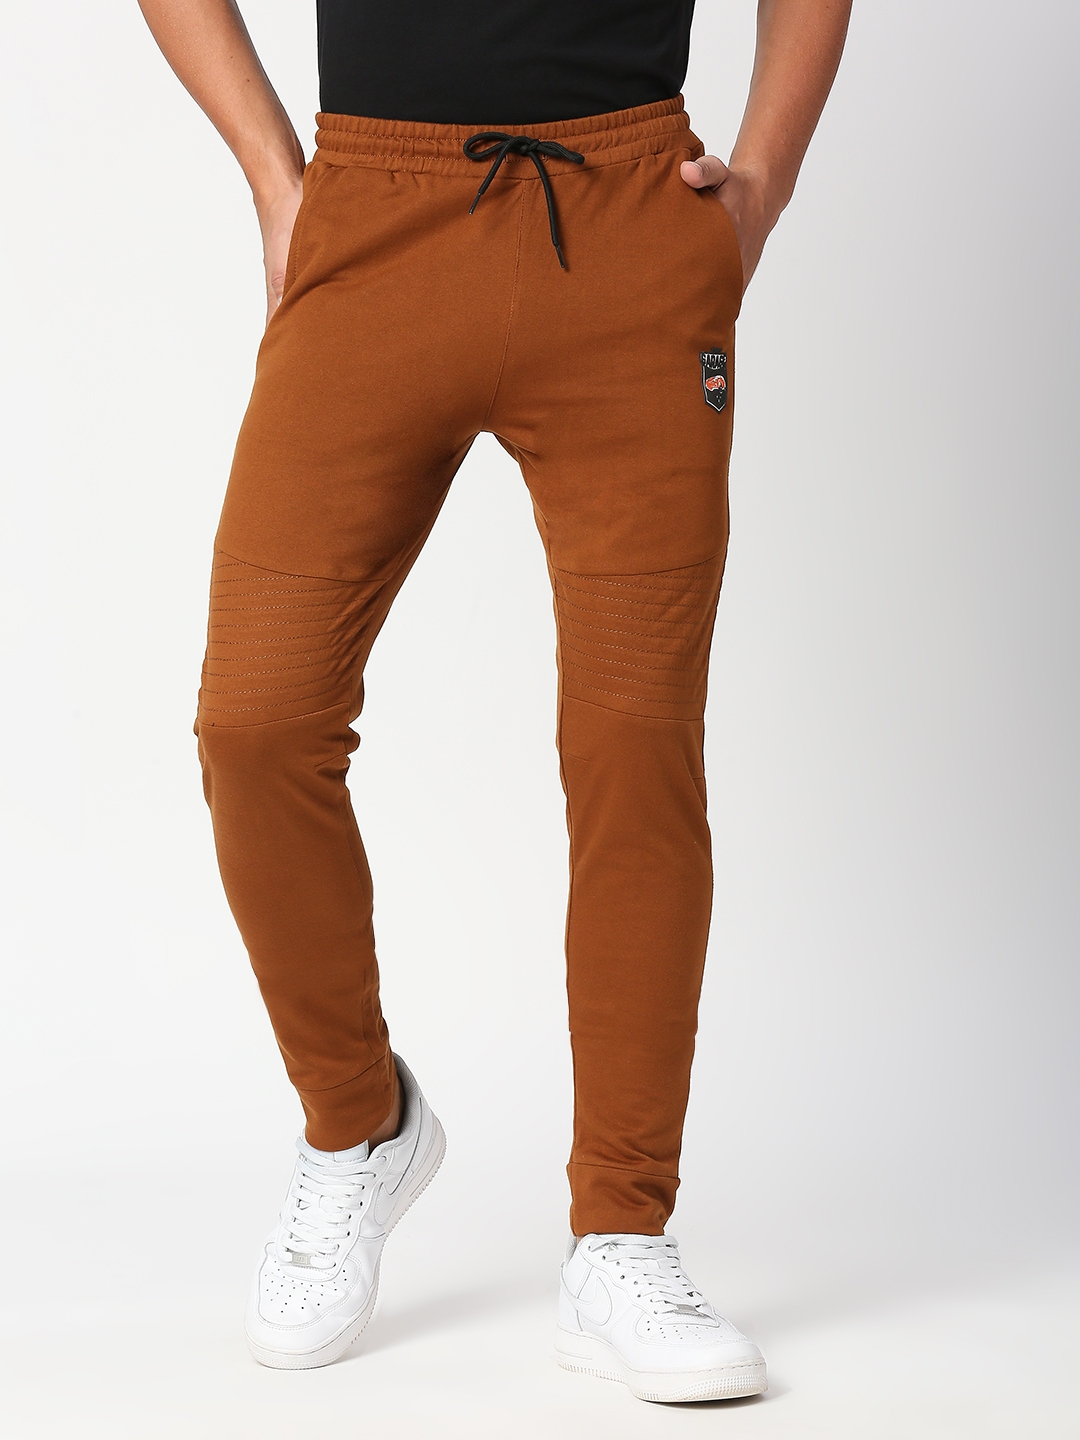 Fitz Solids Cotton Blend Regular Fit Track Pants - Camel Brown